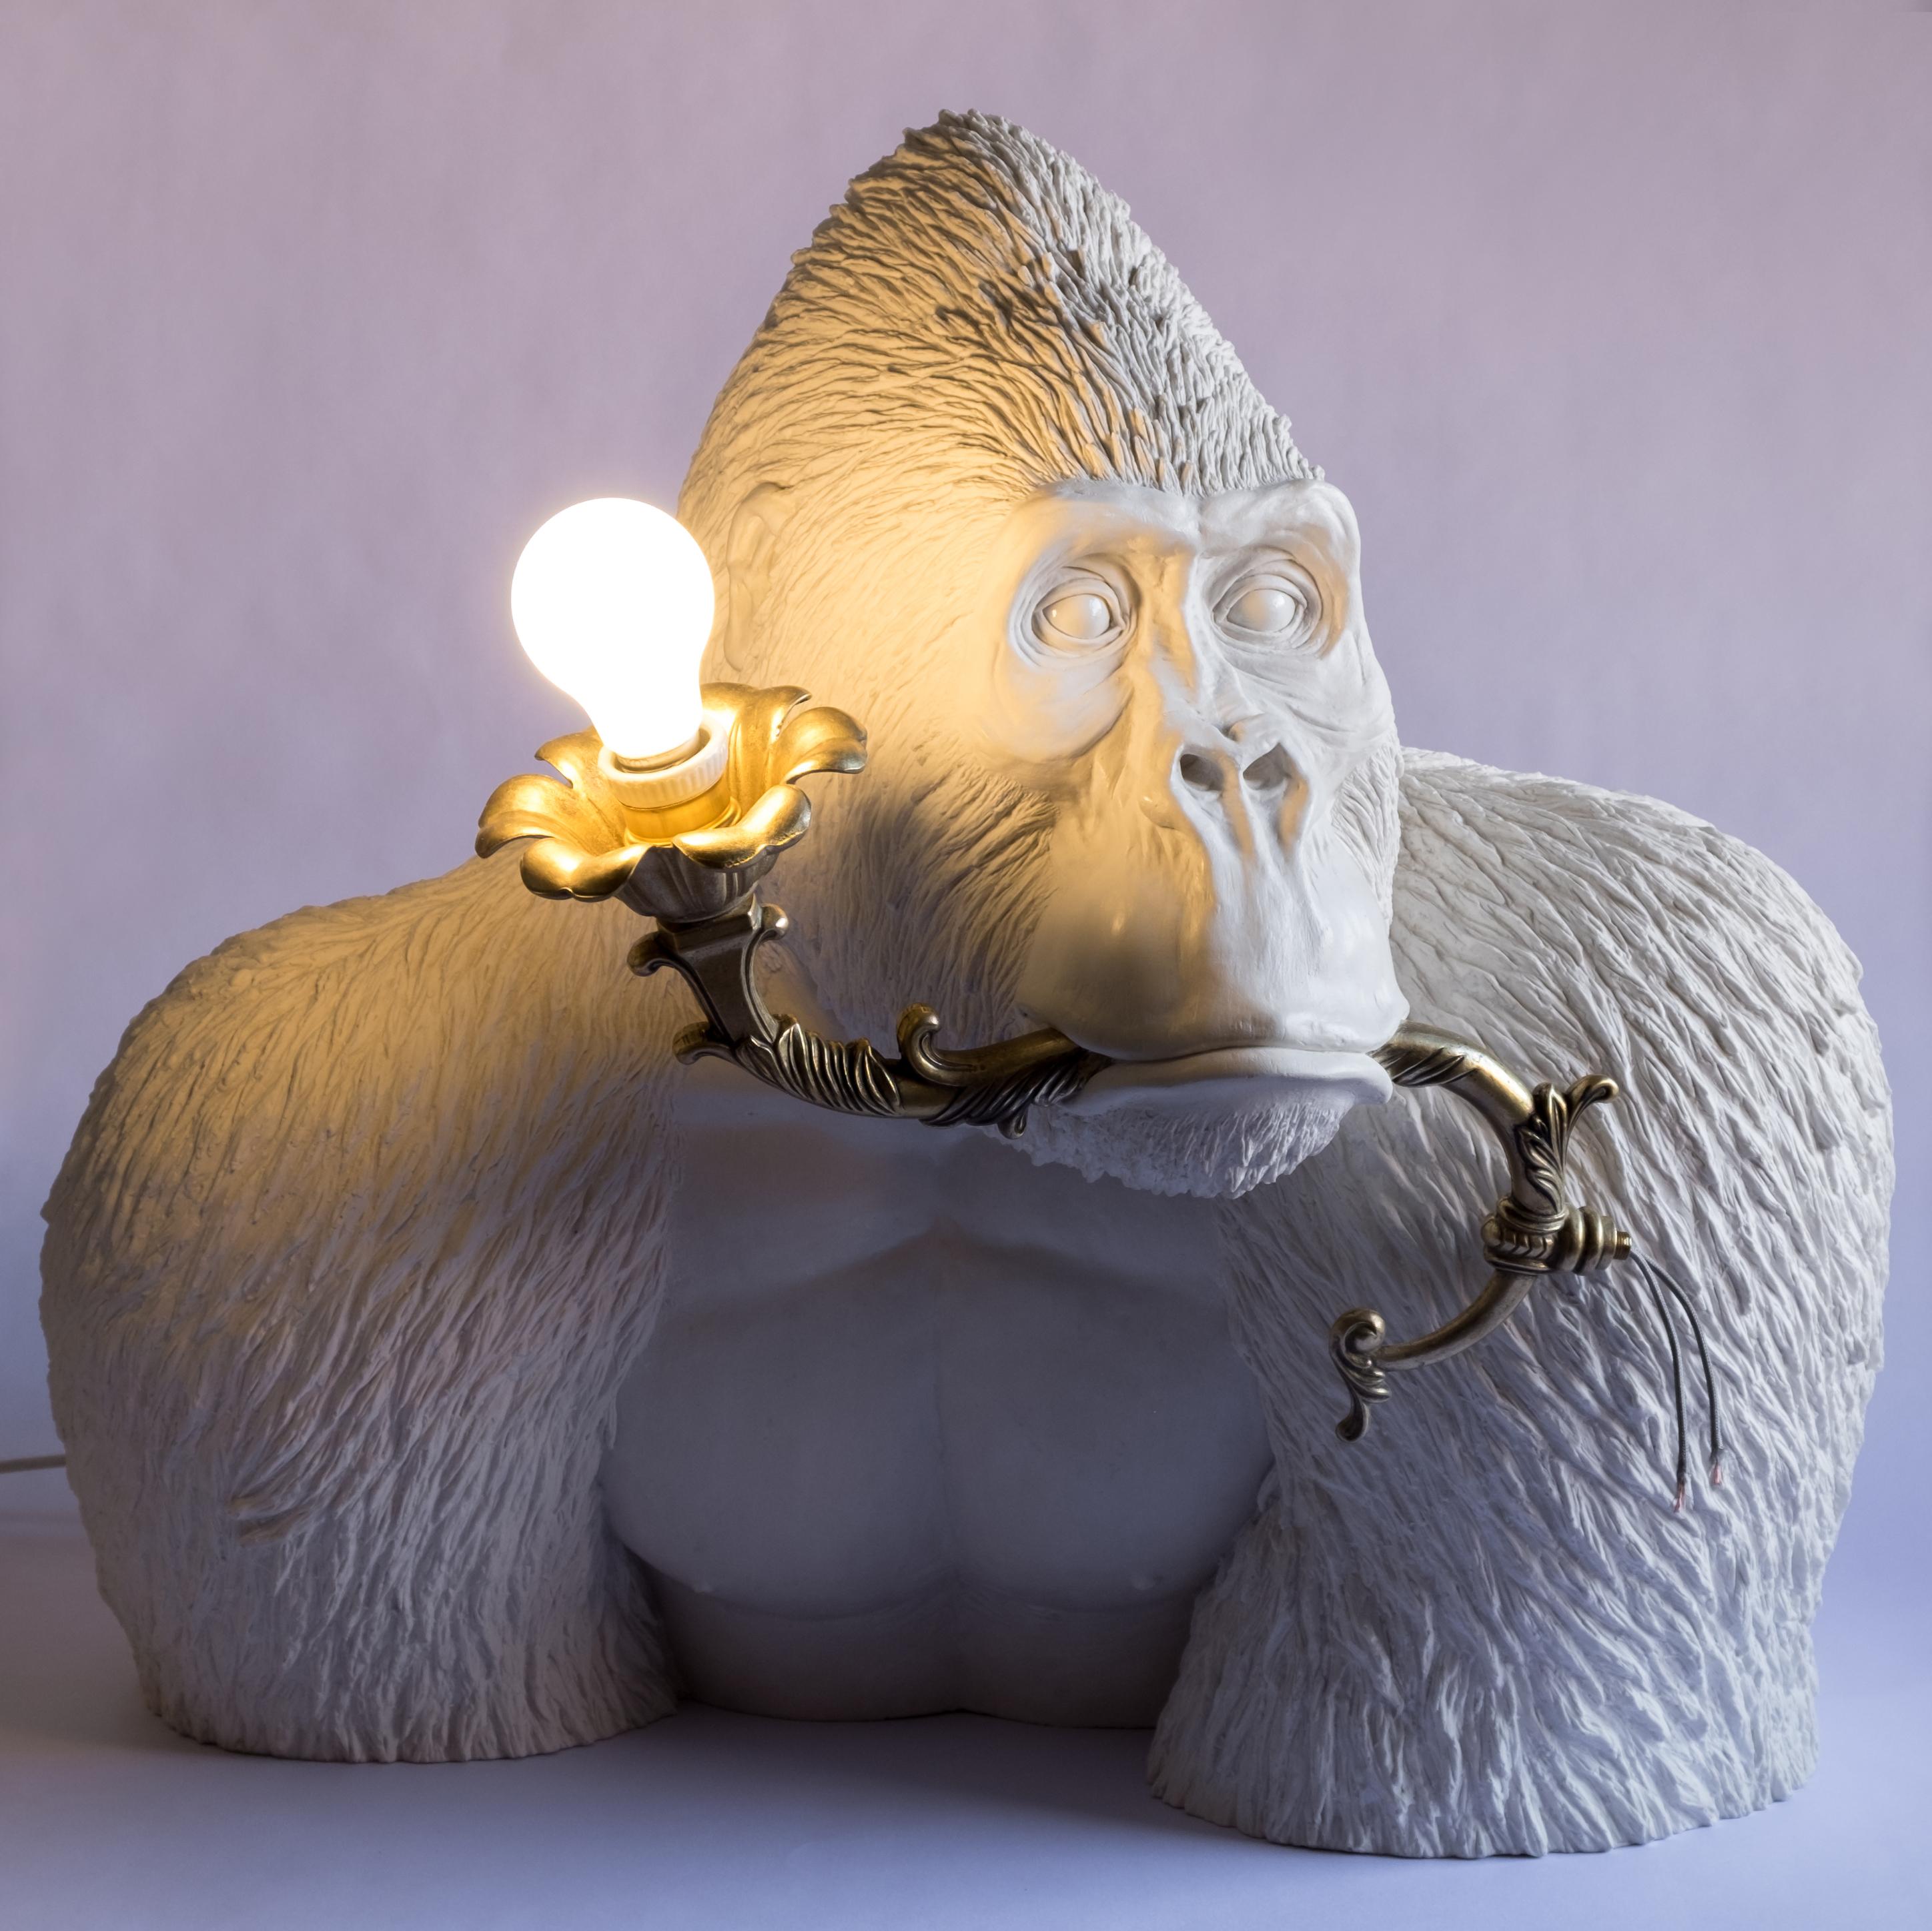 hologram gorilla lamp